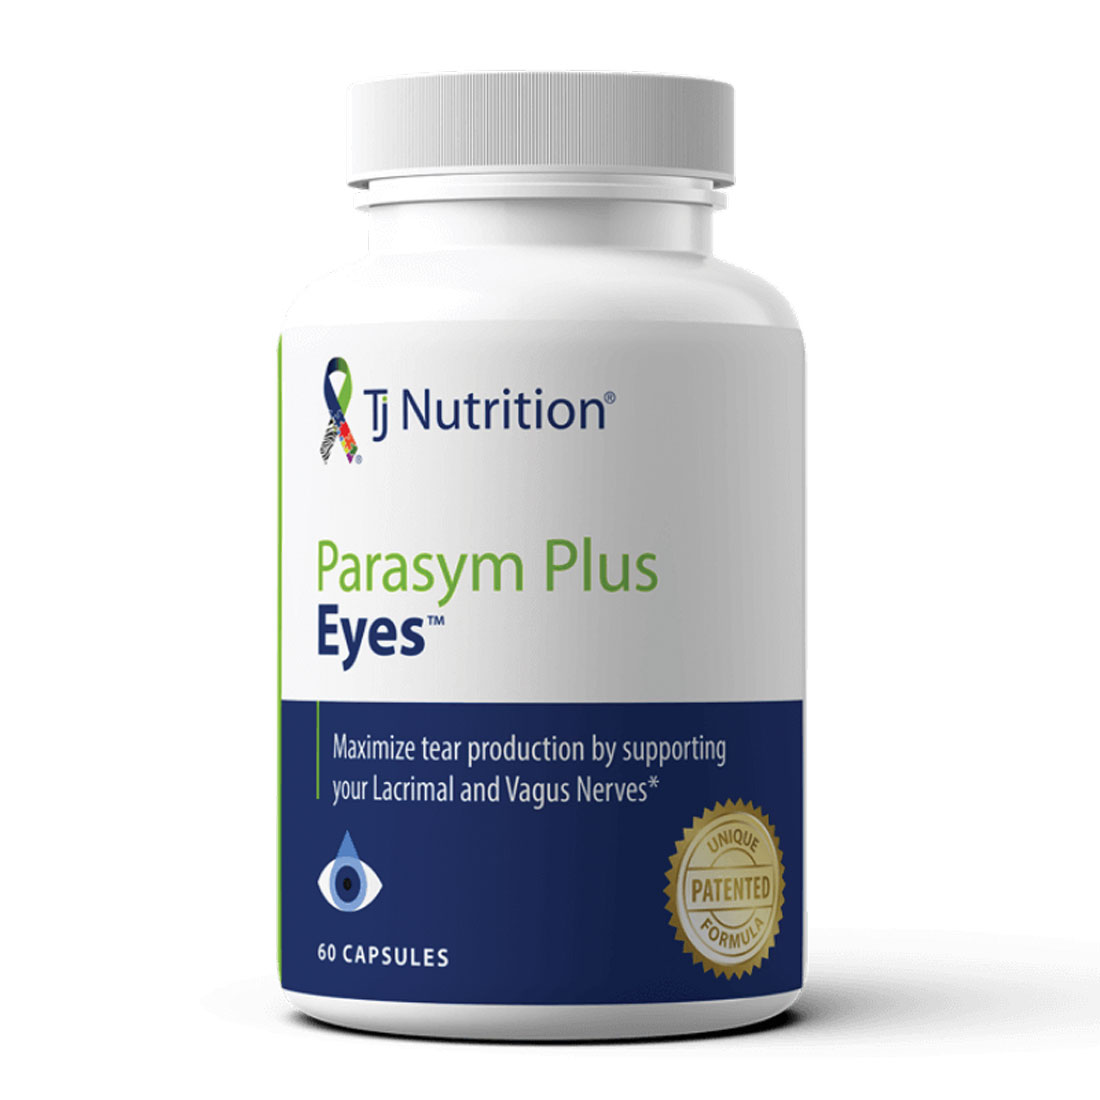 Parasym Plus Eyes